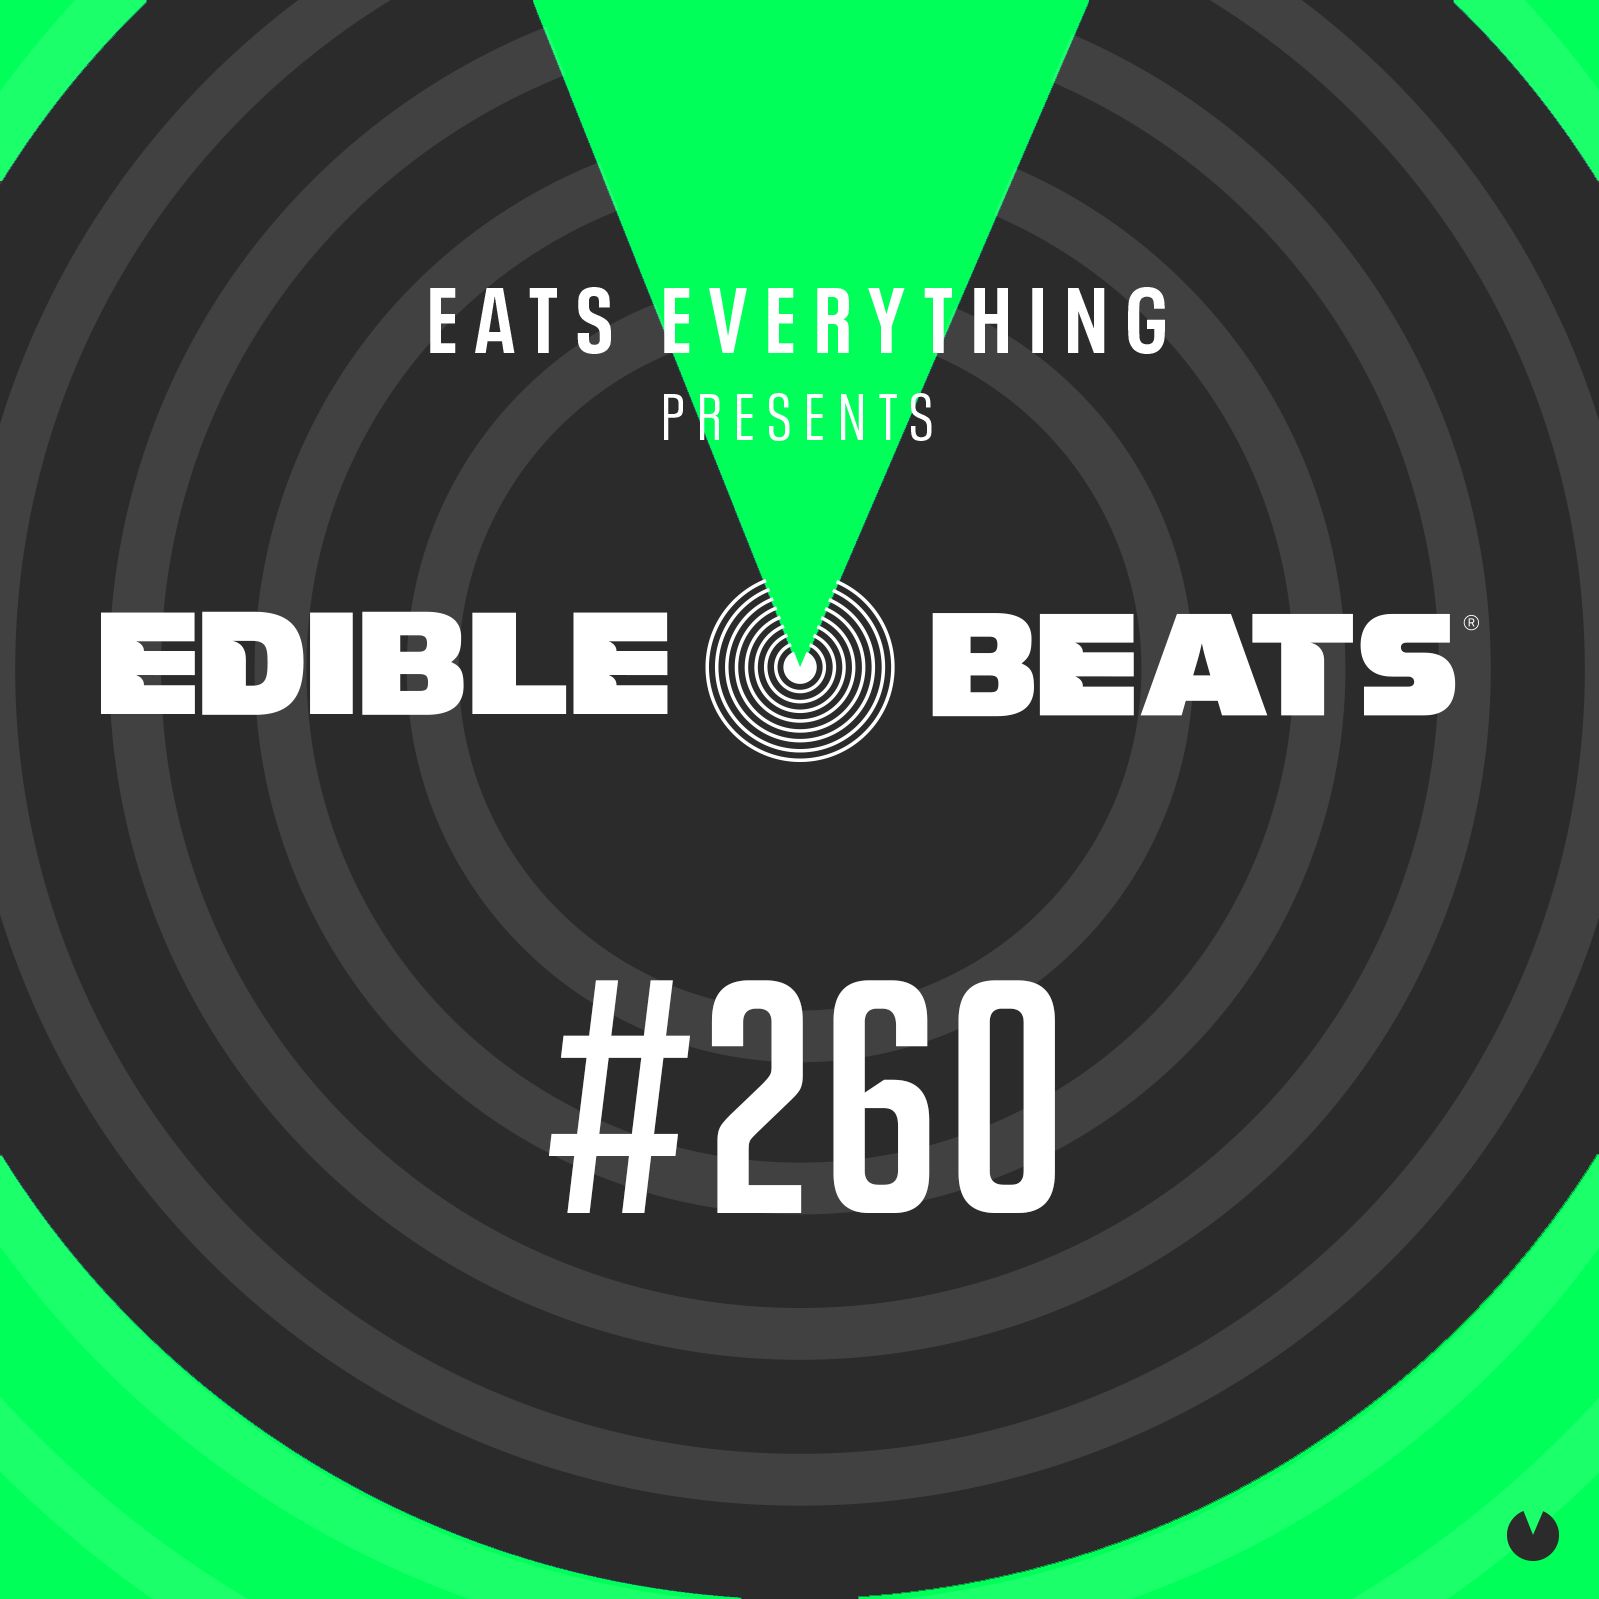 Edible Beats #260 guest mix from Edd